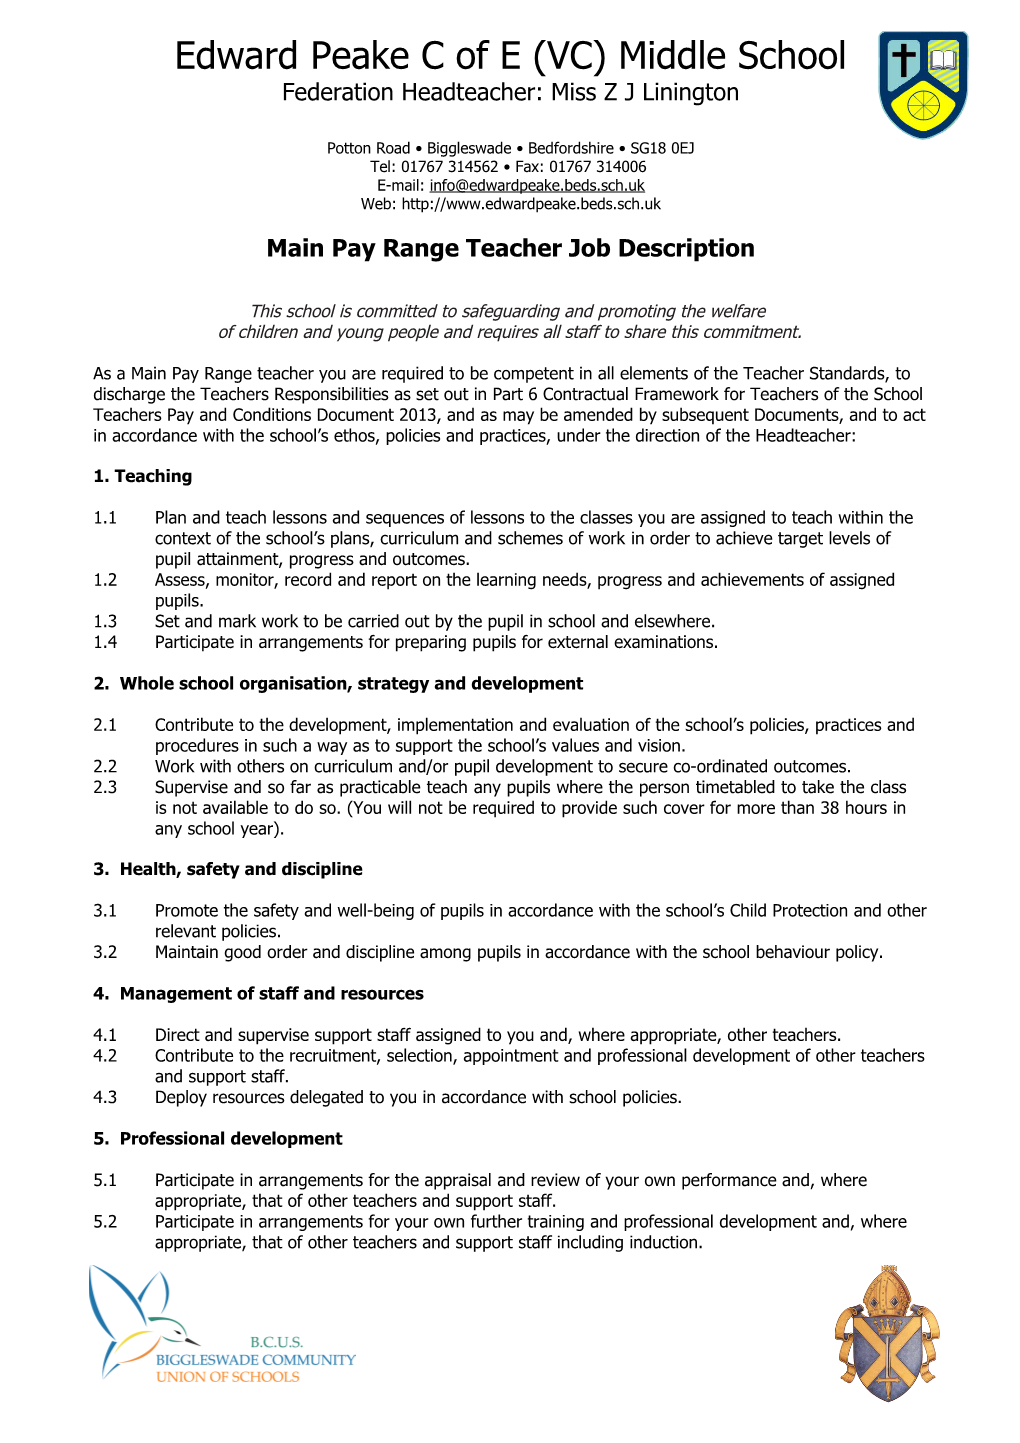 Main Pay Range Teacher Job Description